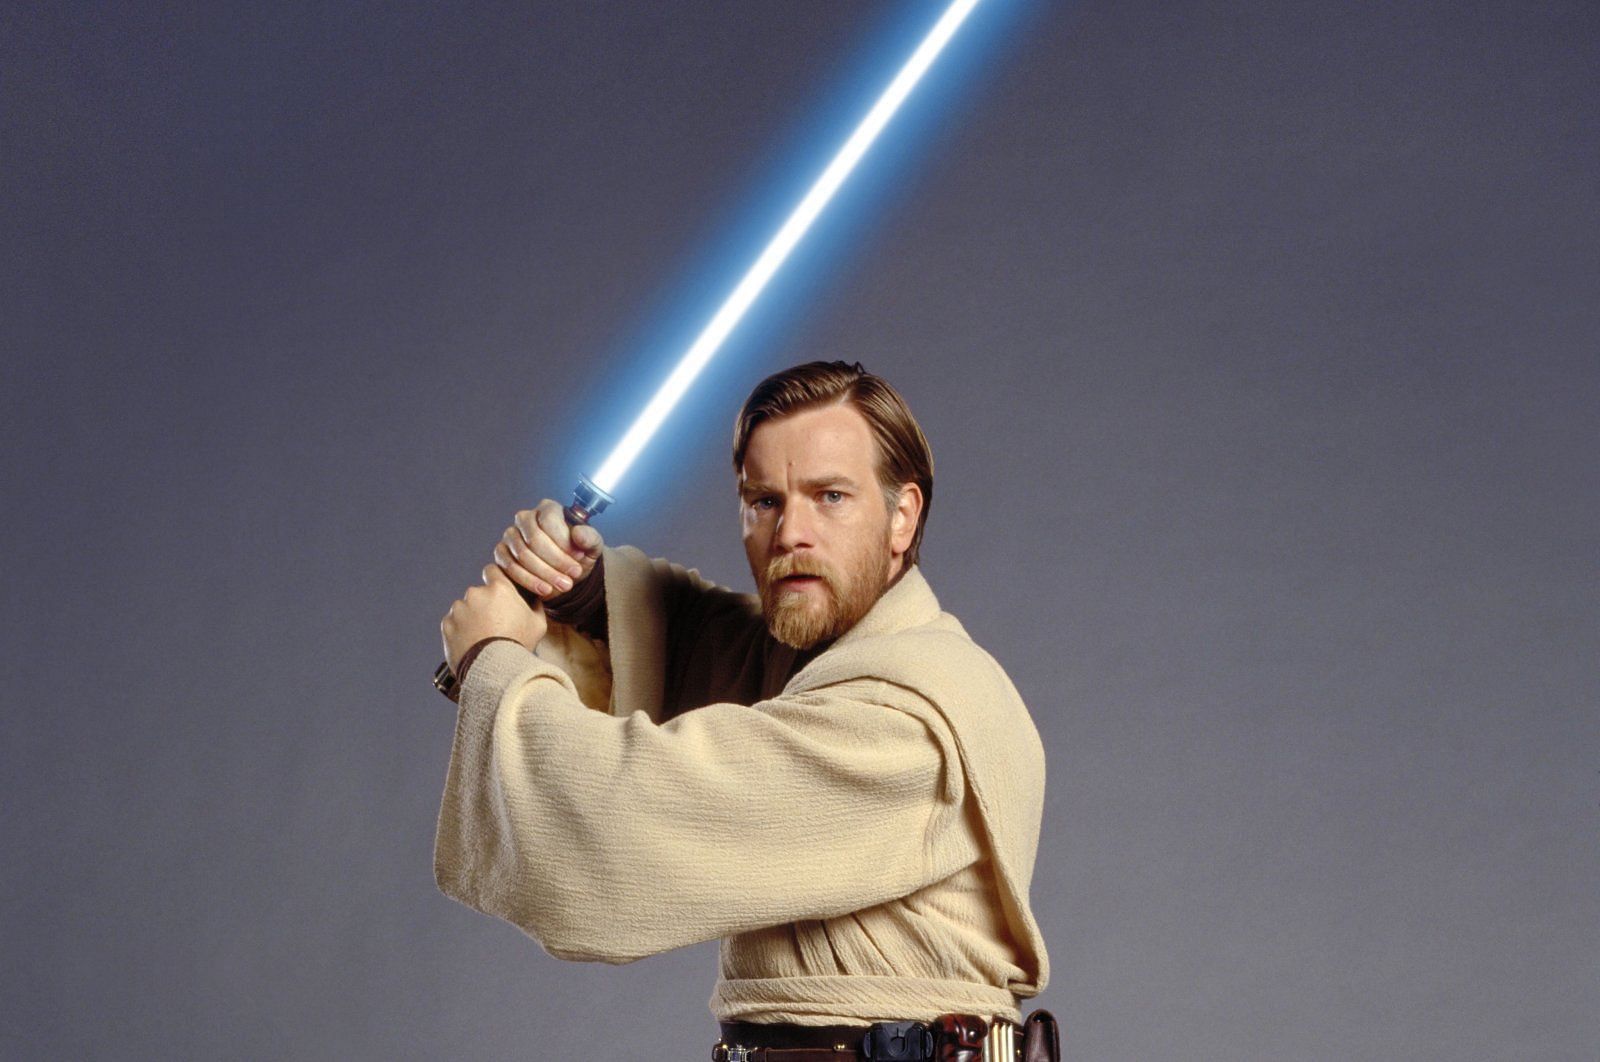 A still of Obi-Wan in a fighting stance (Image via Lucasfilm Ltd.)